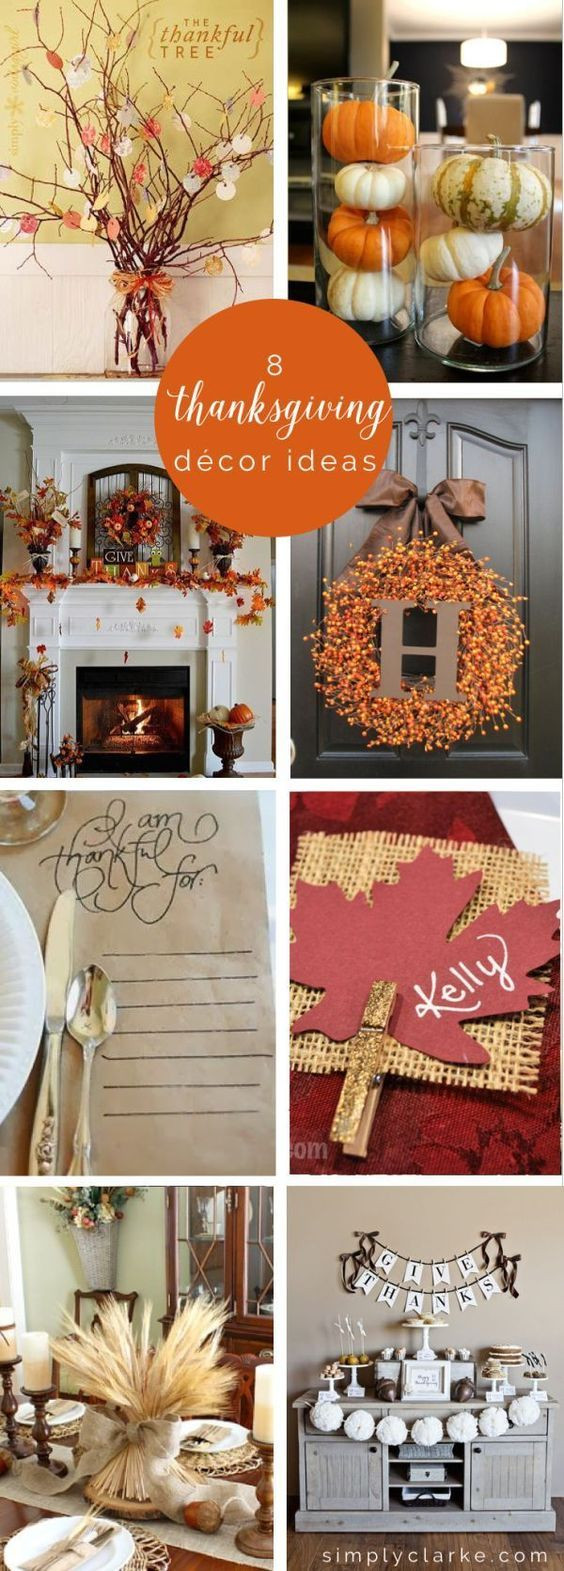 Thanksgiving Home Decor
 Best 25 Thanksgiving decorations ideas on Pinterest